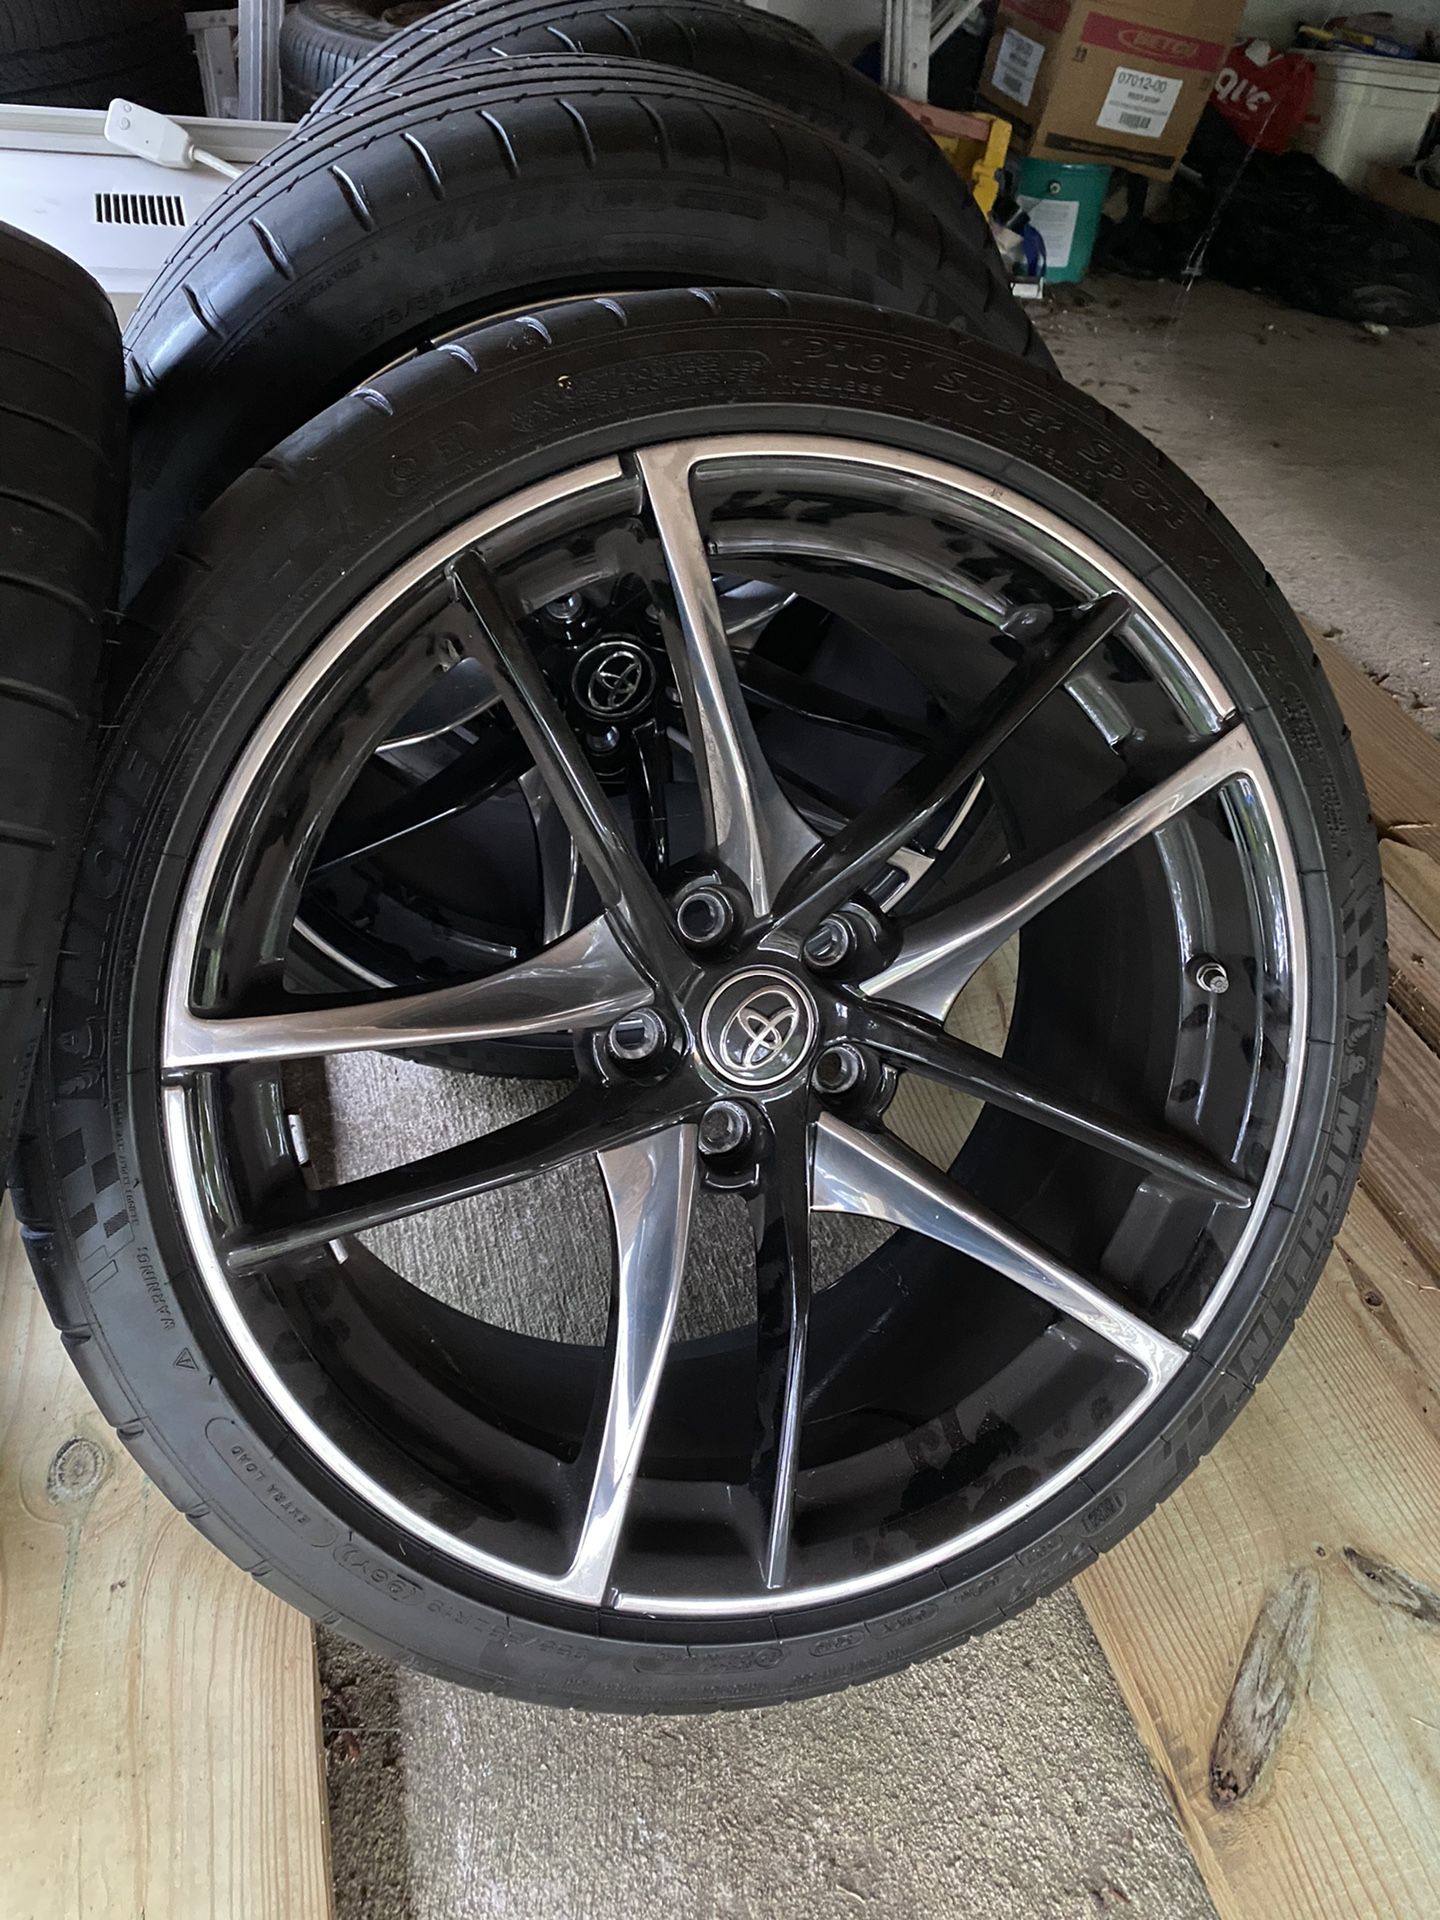 2020 Toyota Supra wheels for sale 5x112